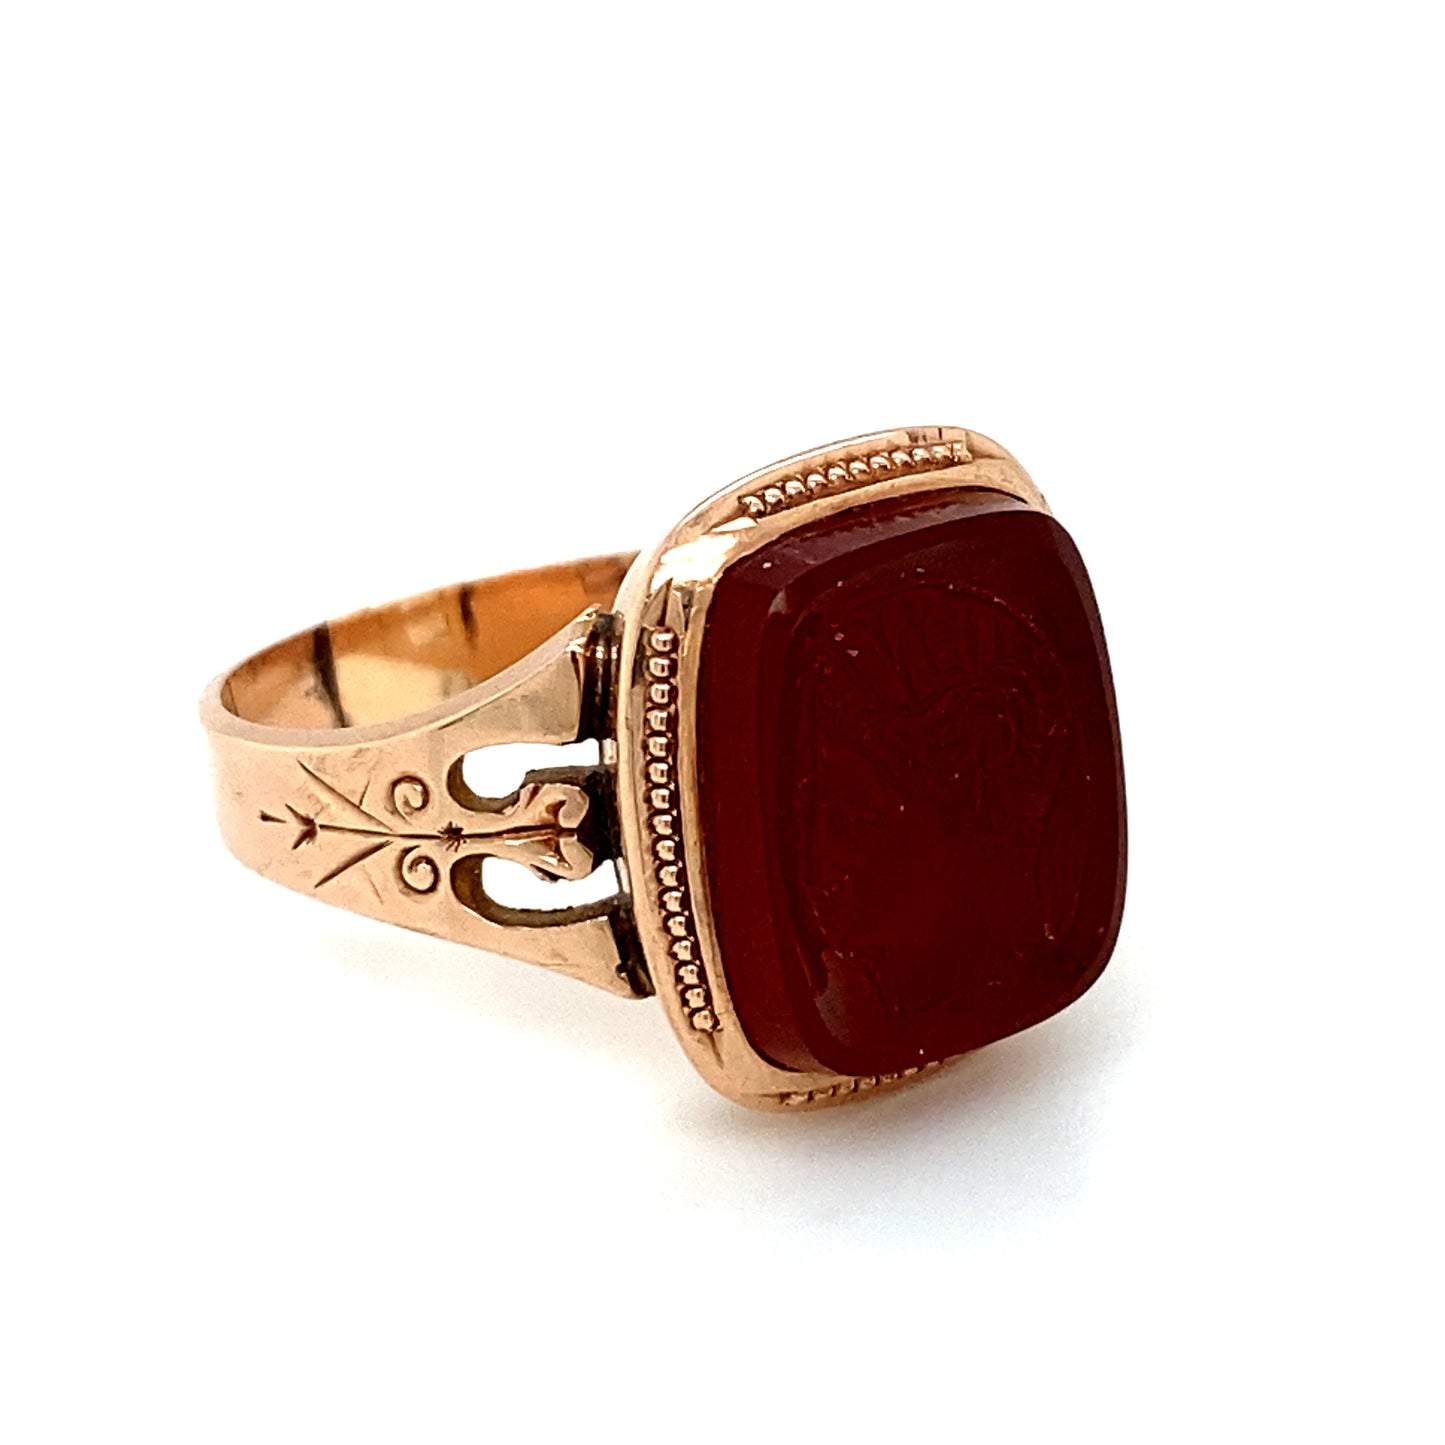 Circa 1910s Edwardian Carnelian Intaglio Ring in 14K Rose Gold